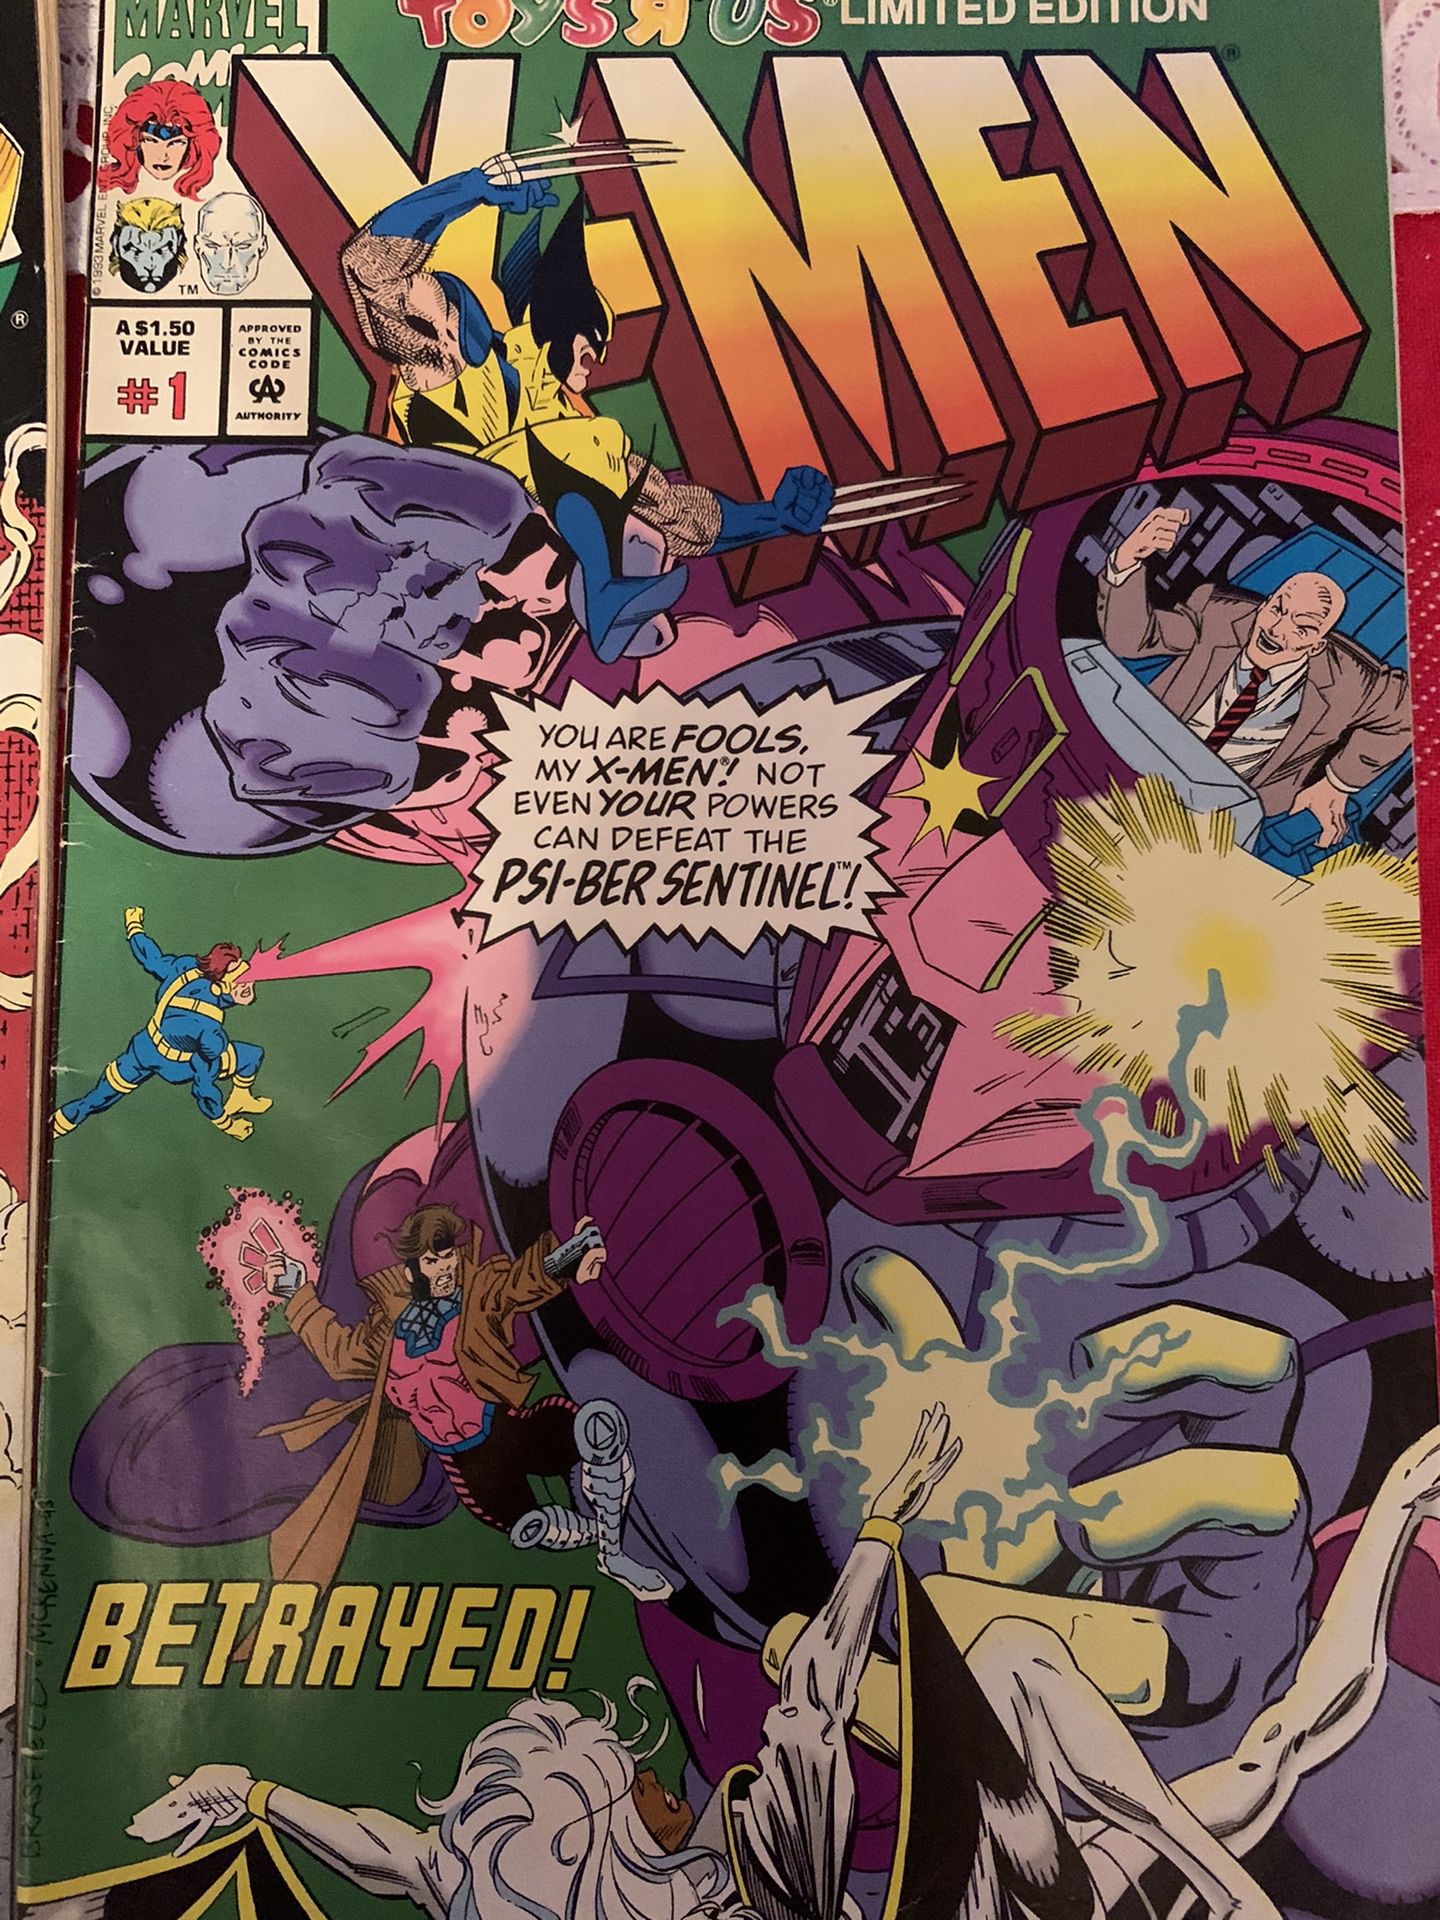 X-men vintage comics!